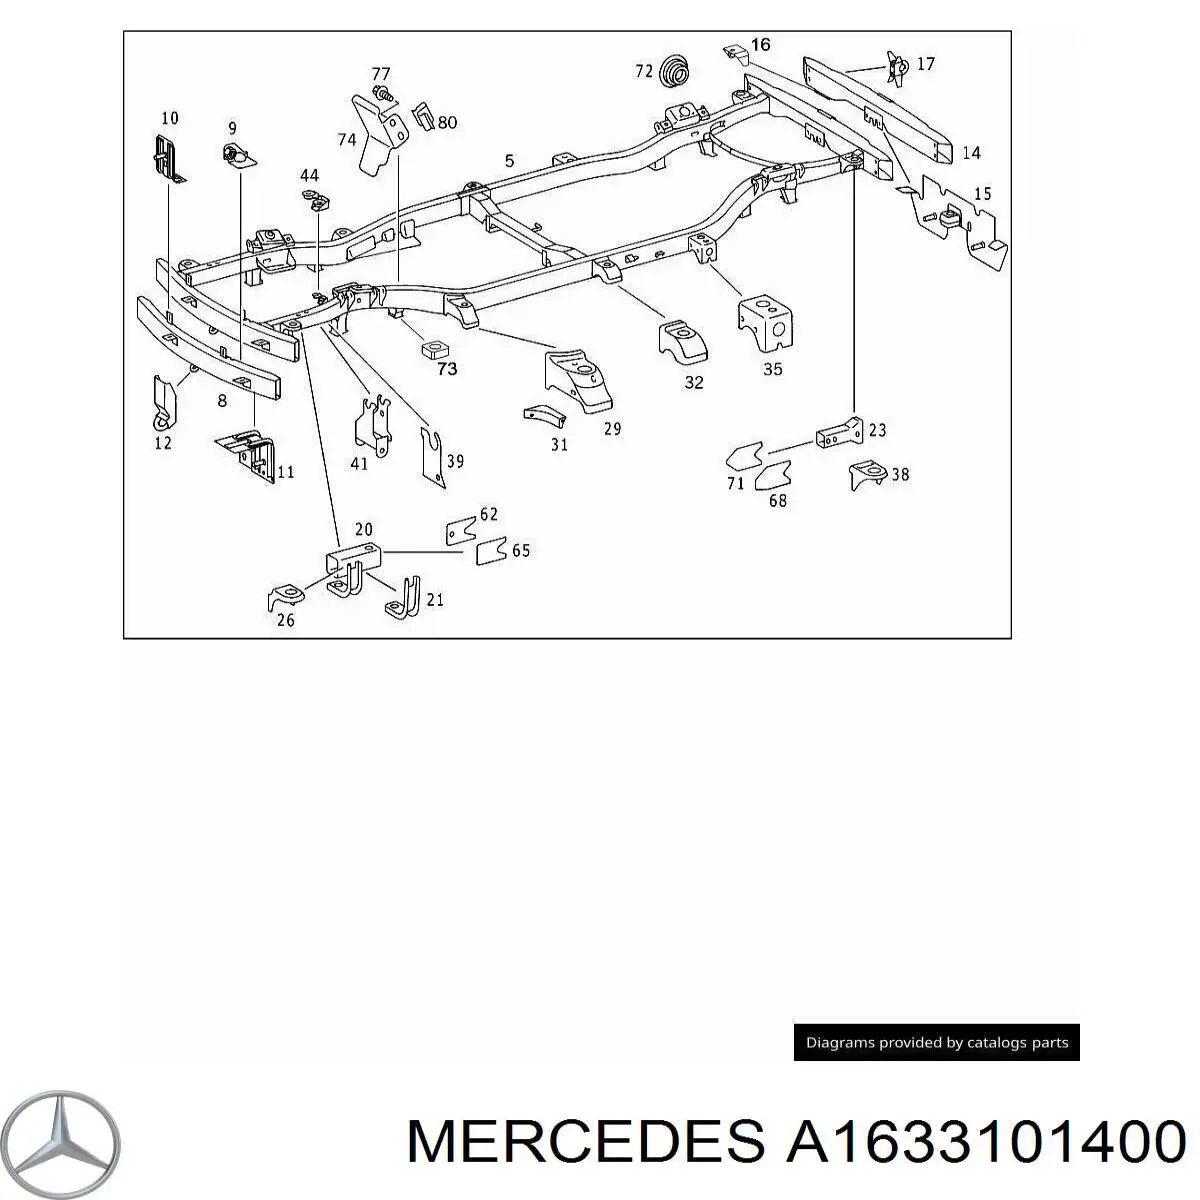 Marco del cuerpo para Mercedes ML/GLE (W163)